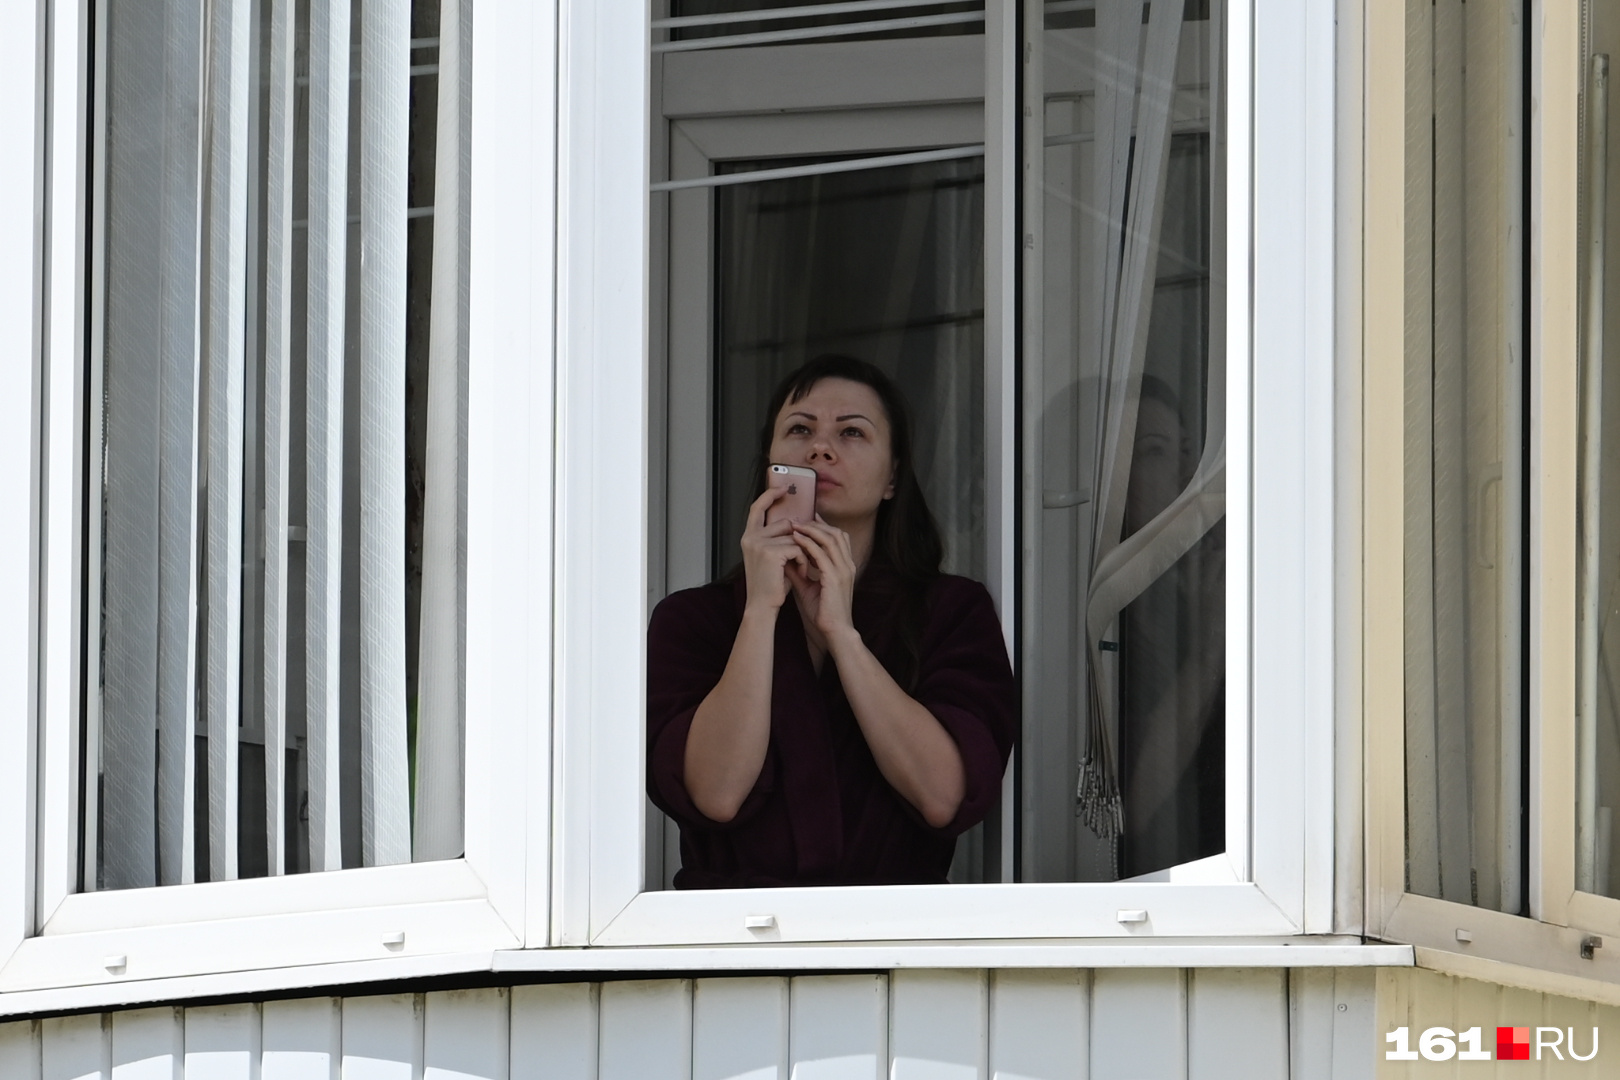 Тысячи ростовчан подошли к окнам своих квартир